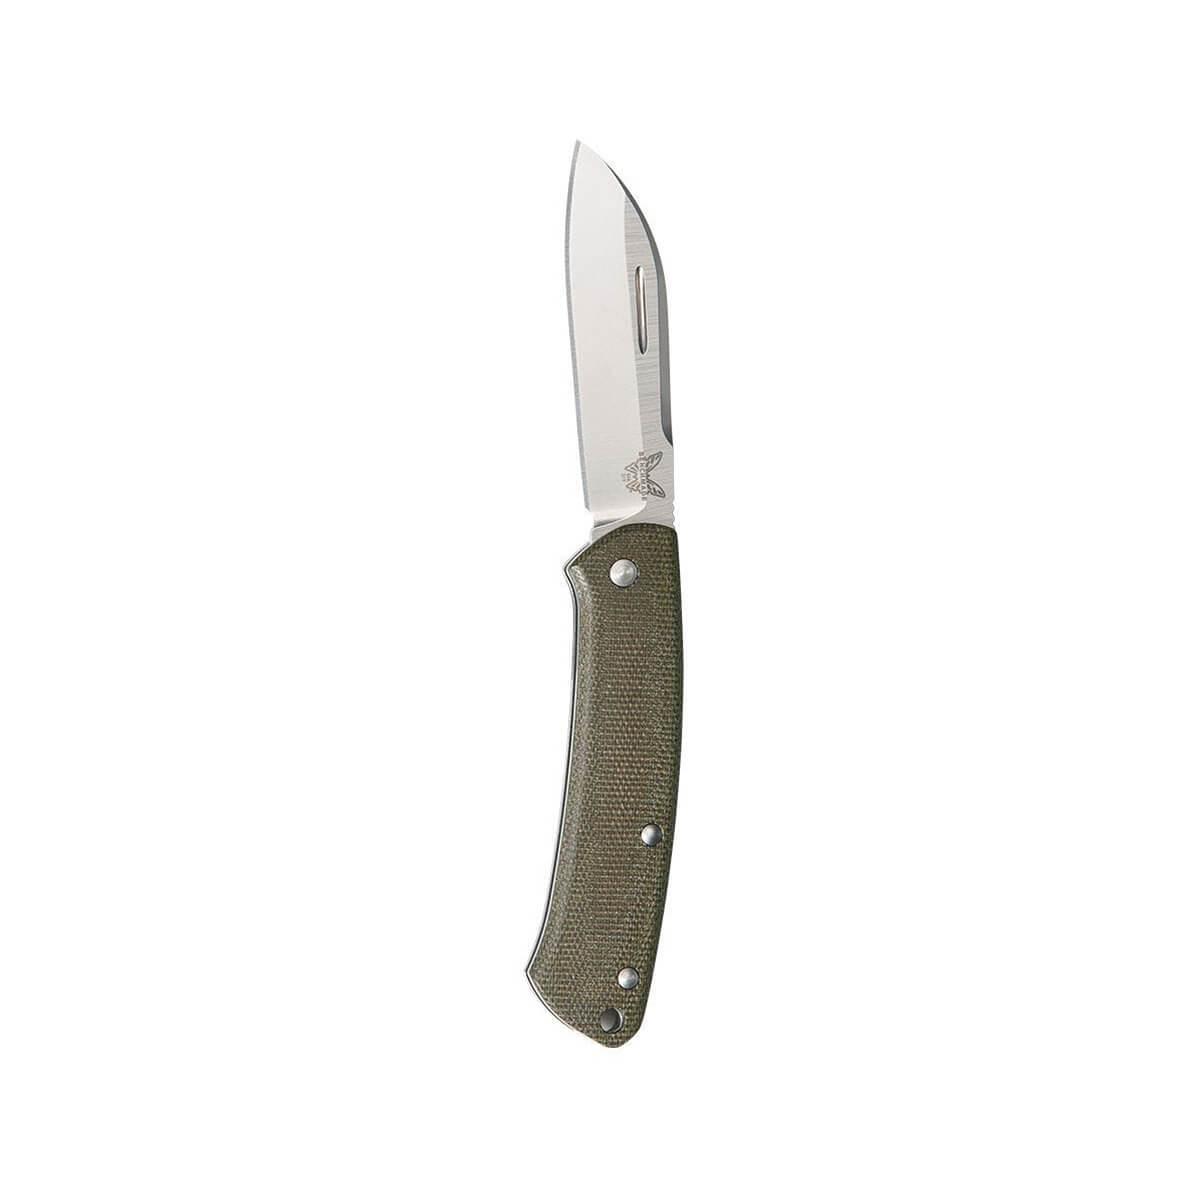  319 Proper Micarta Knife